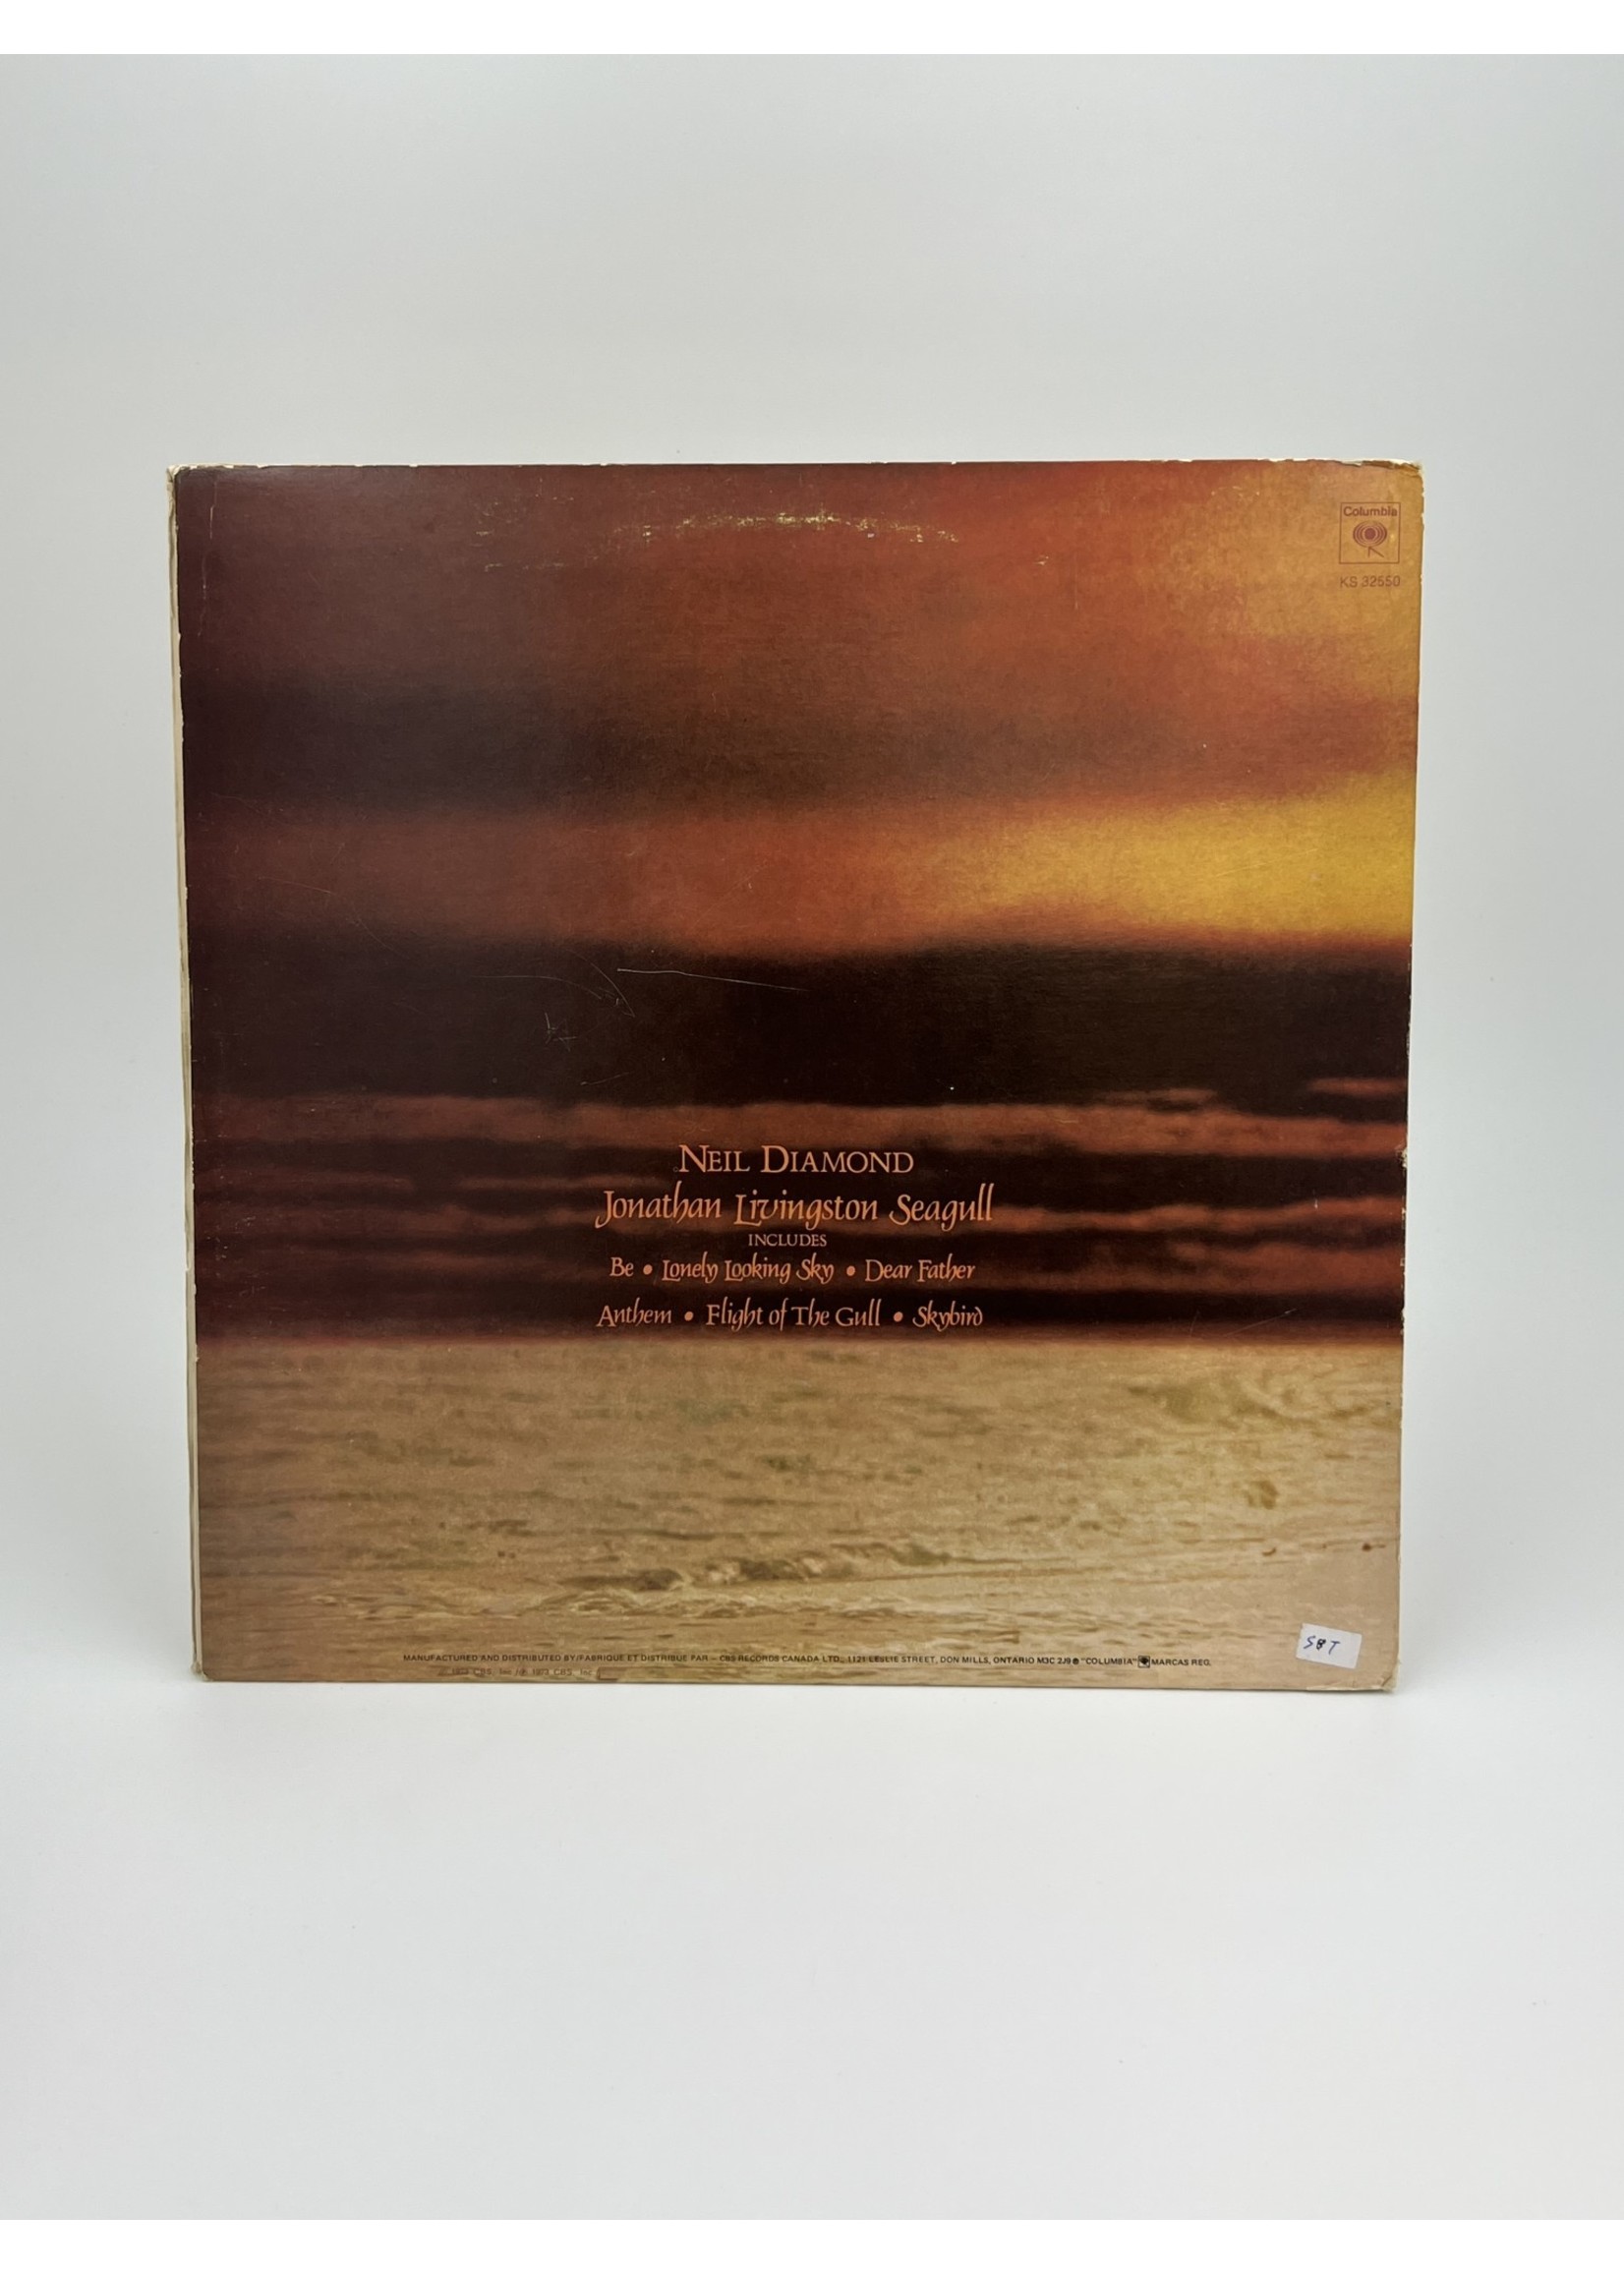 LP Neil Diamond Jonathan Livingston Seagull Soundtrack var4 LP Record